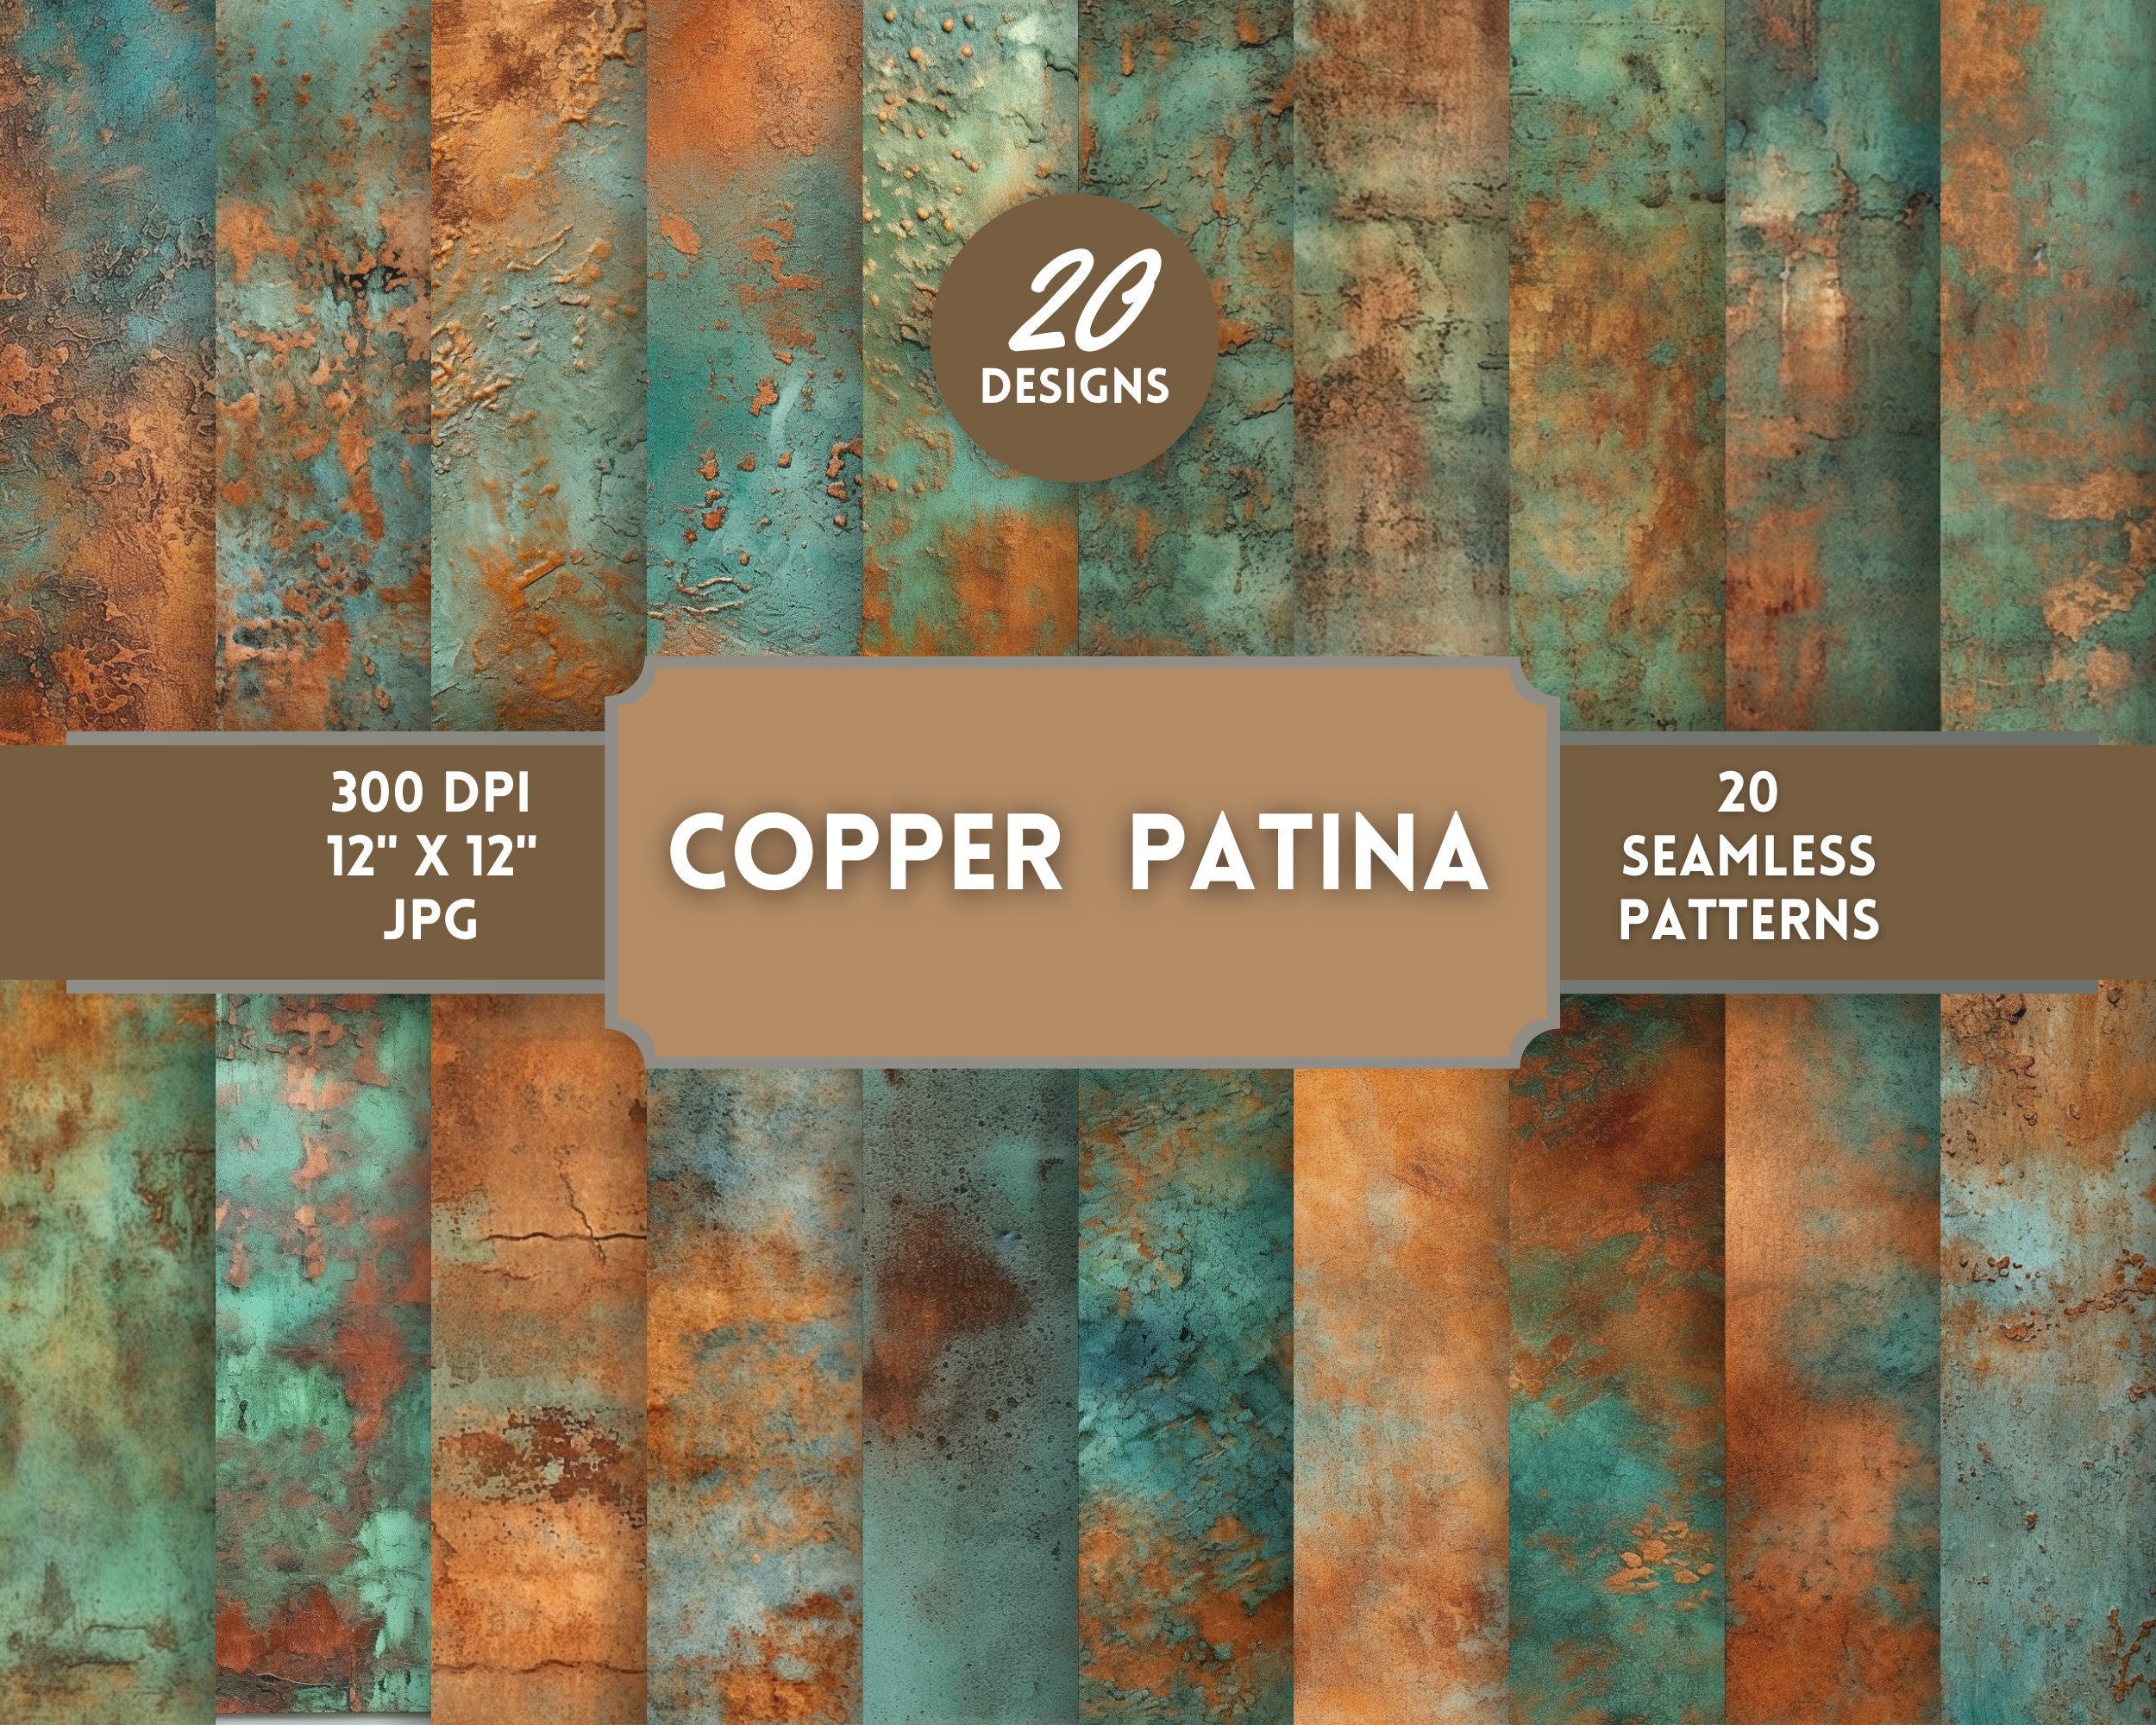 My copper patina job stinks!